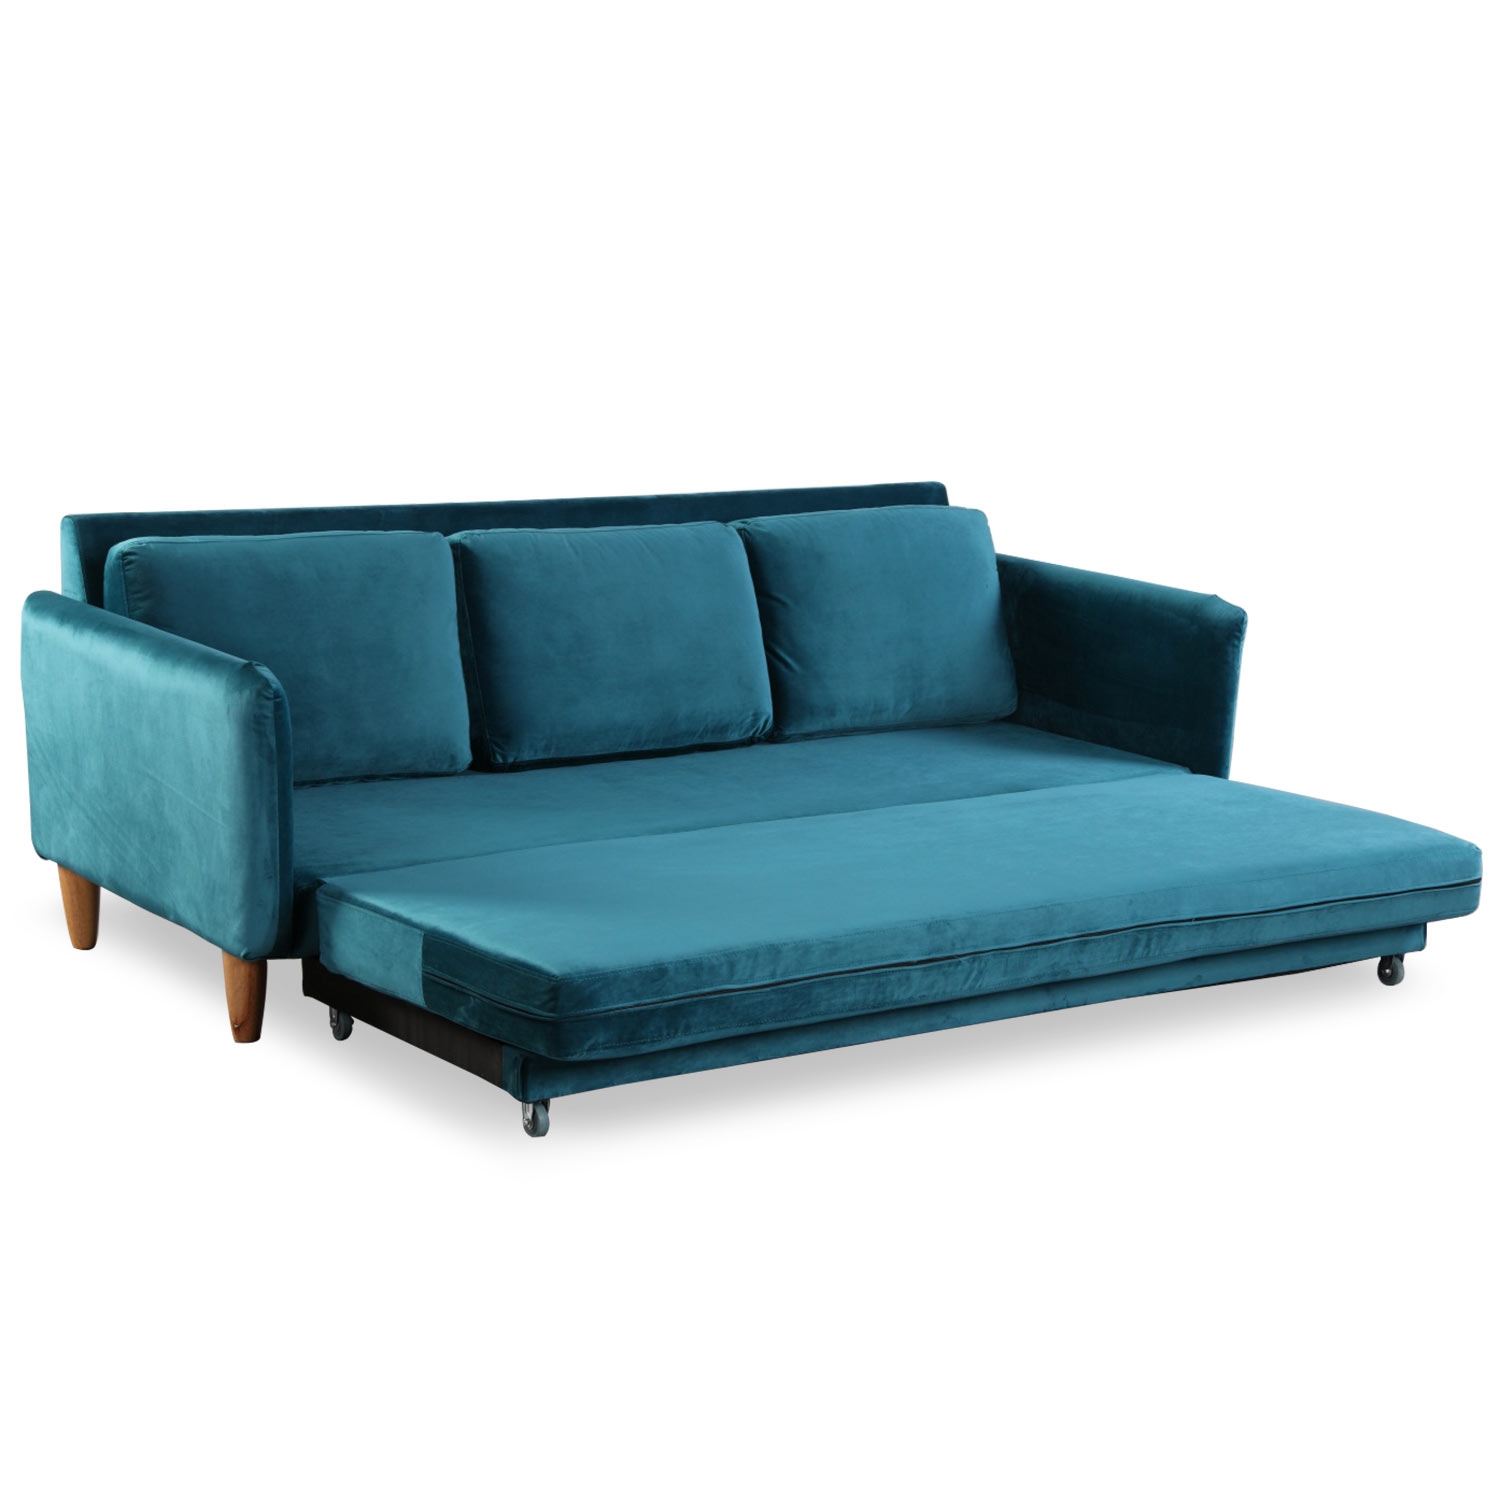 FLIXO 3-Sitzer Schlafsofa mit Samtbezug Blau